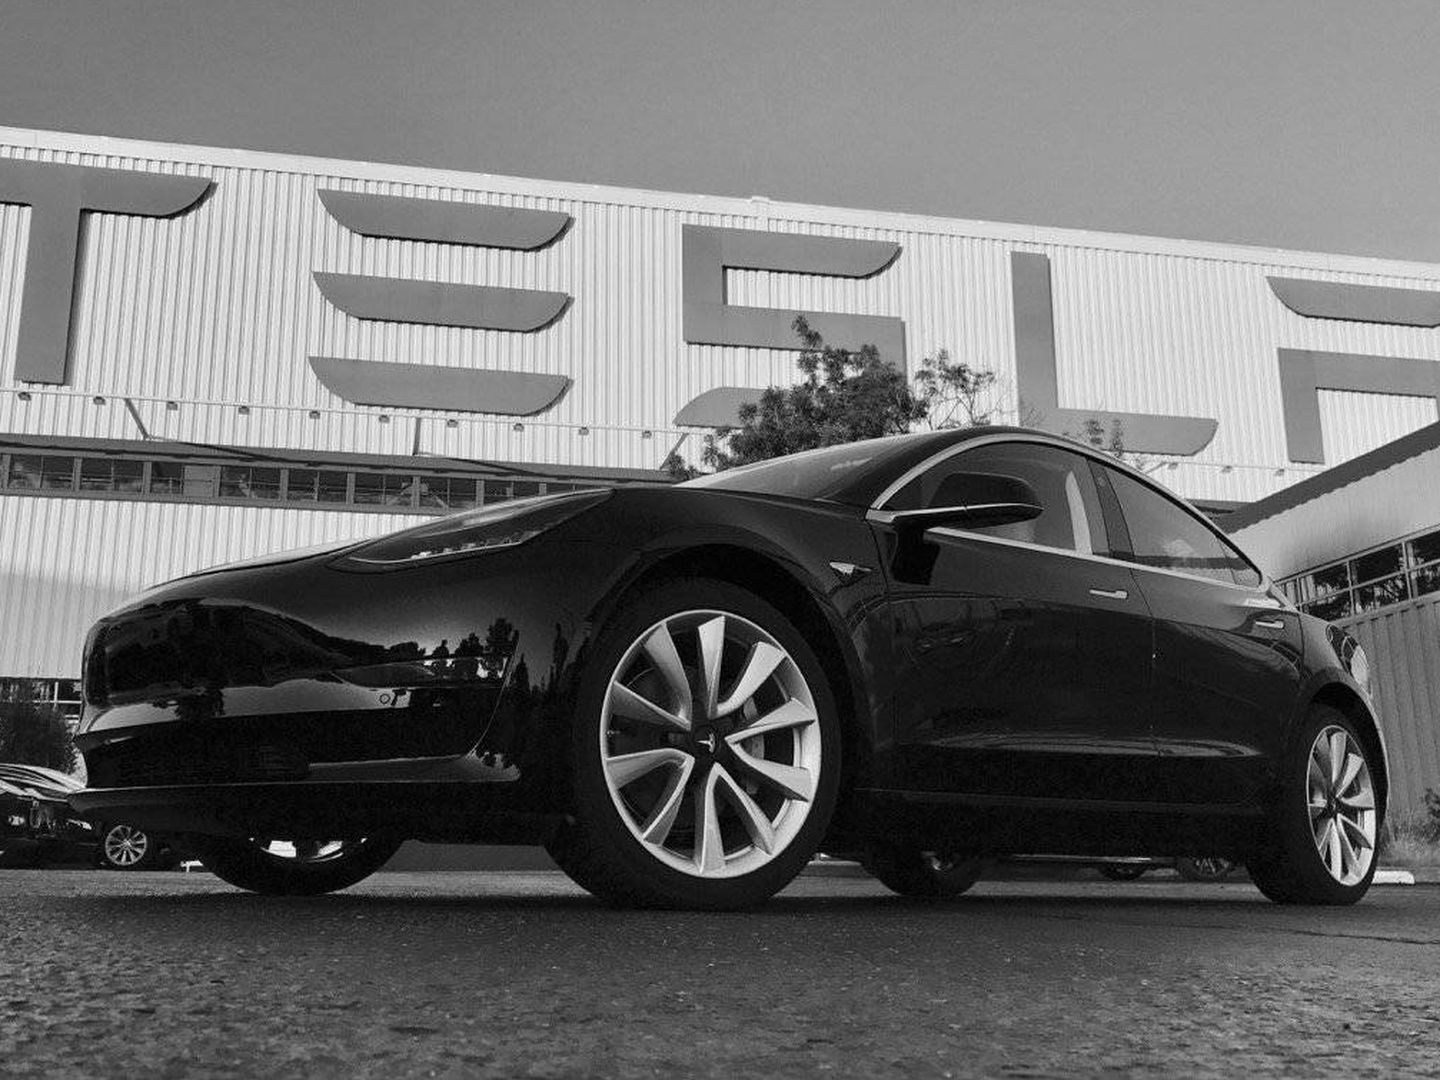 La segunda foto del coche compartida por Elon Musk